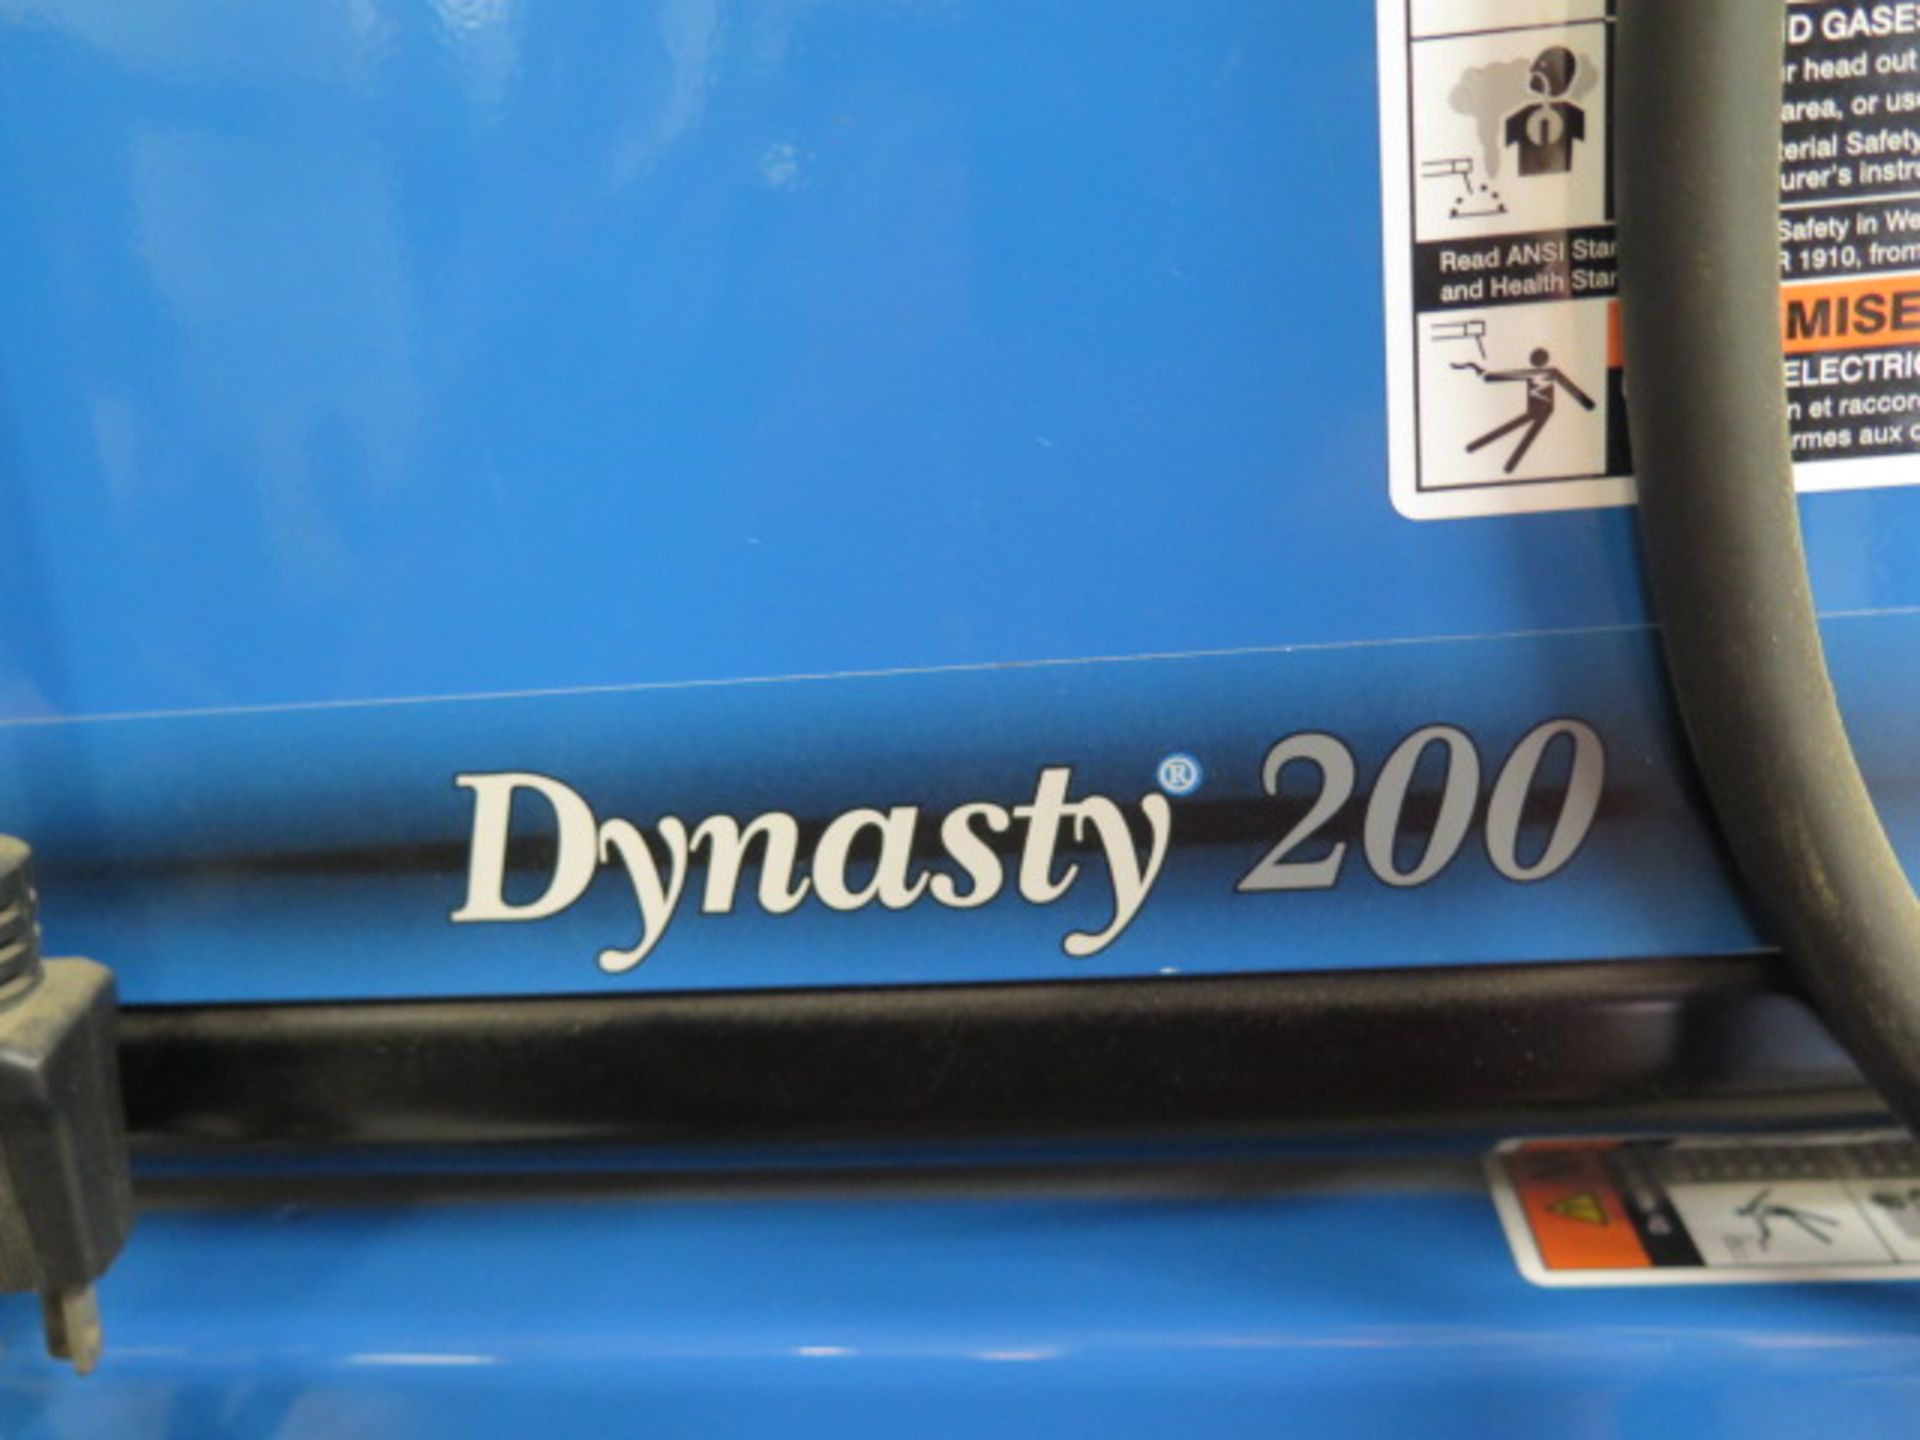 Miller Dynasty 200DX Arc Welding Source s/n ME100909L w/ Miller Coolmate-1 Cooler Cart, SOLD AS IS - Image 9 of 9